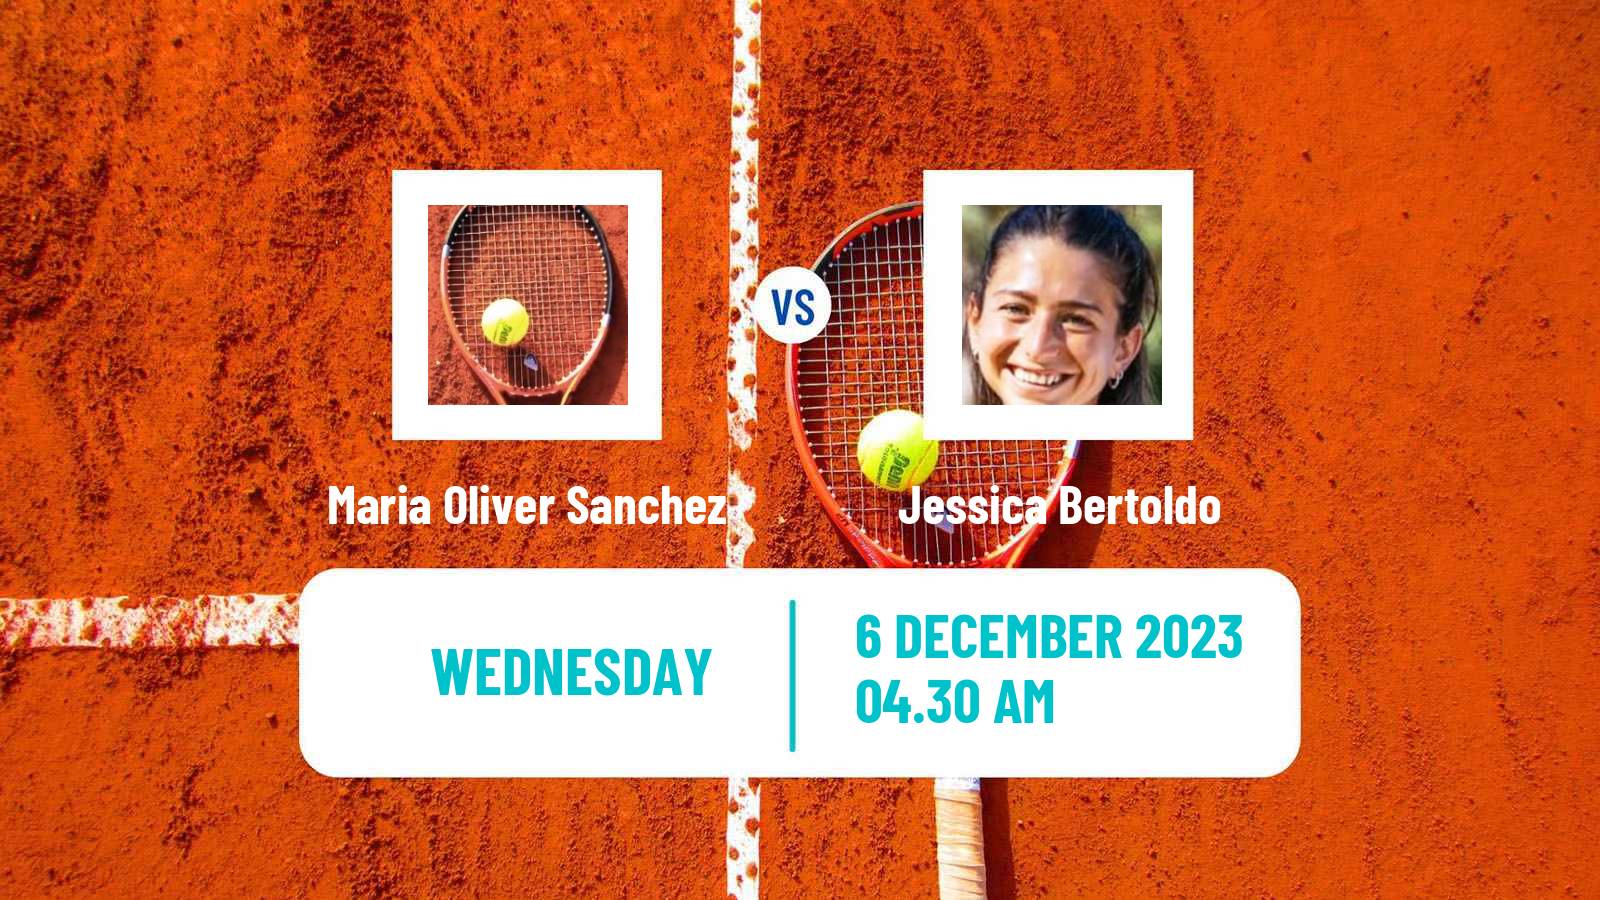 Tennis ITF W15 Valencia 2 Women Maria Oliver Sanchez - Jessica Bertoldo